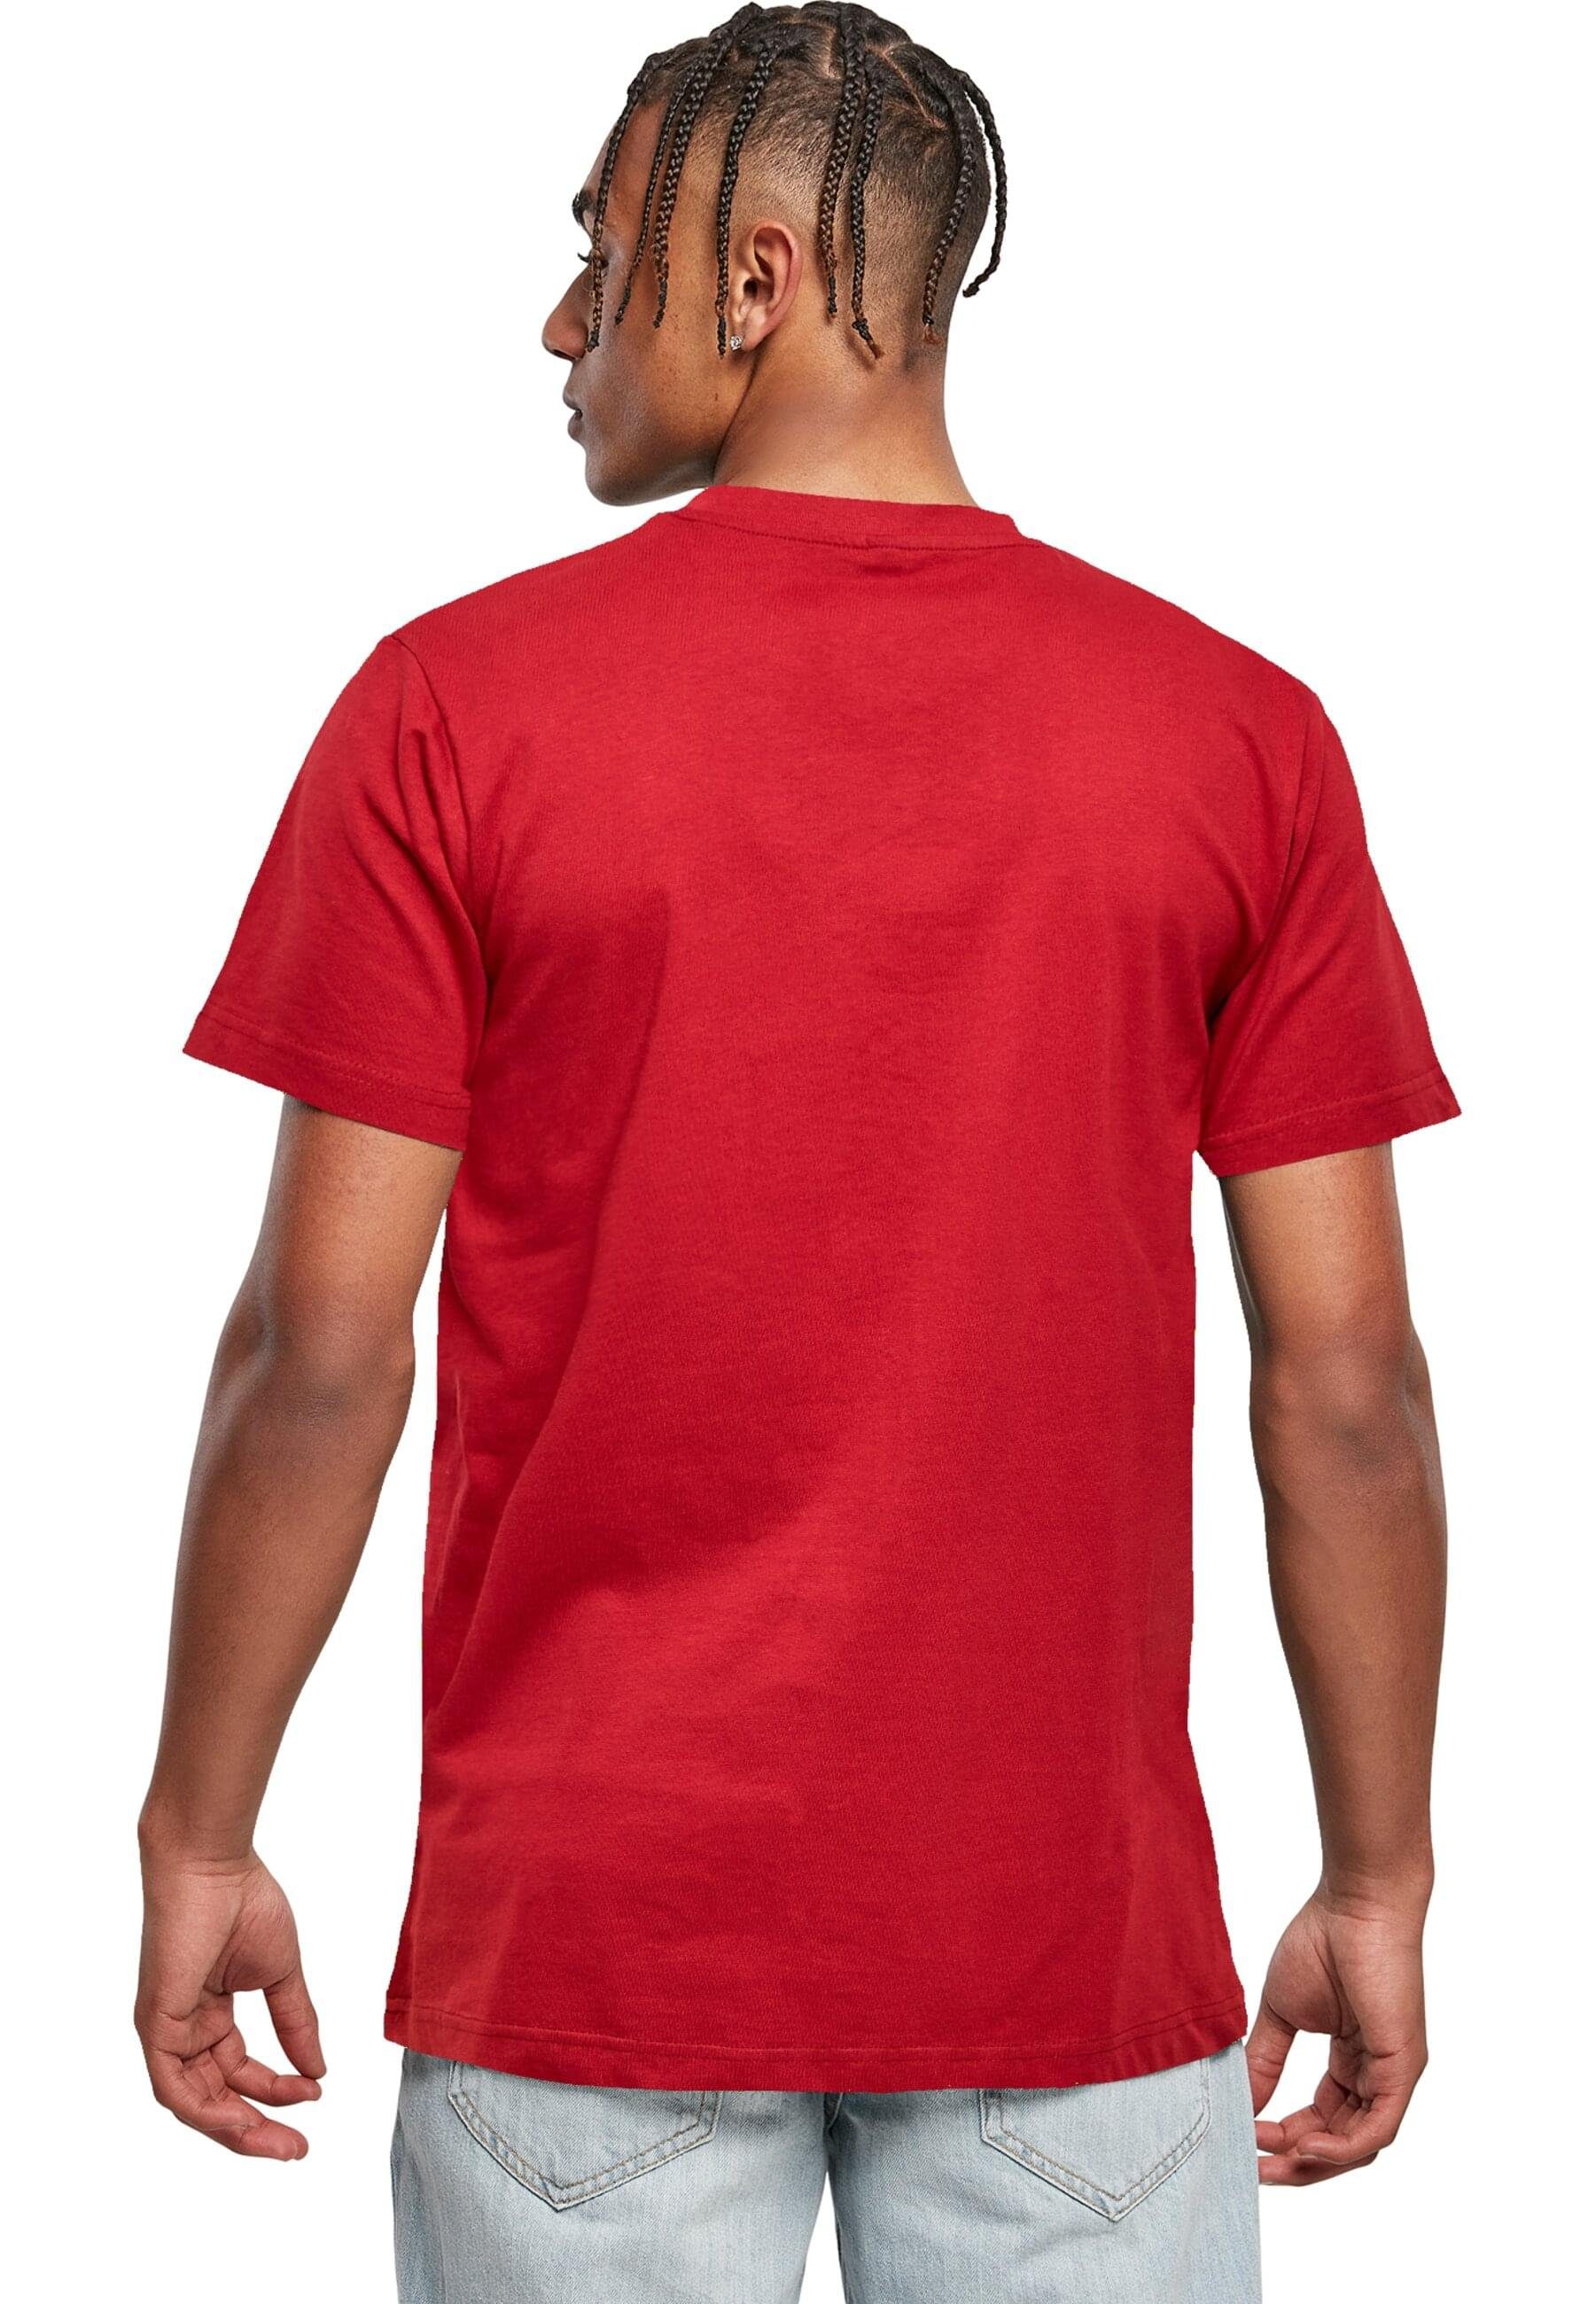 T-Shirt Player Peanuts Merchcode Herren Neck T-Shirt (1-tlg) - Round burgundy